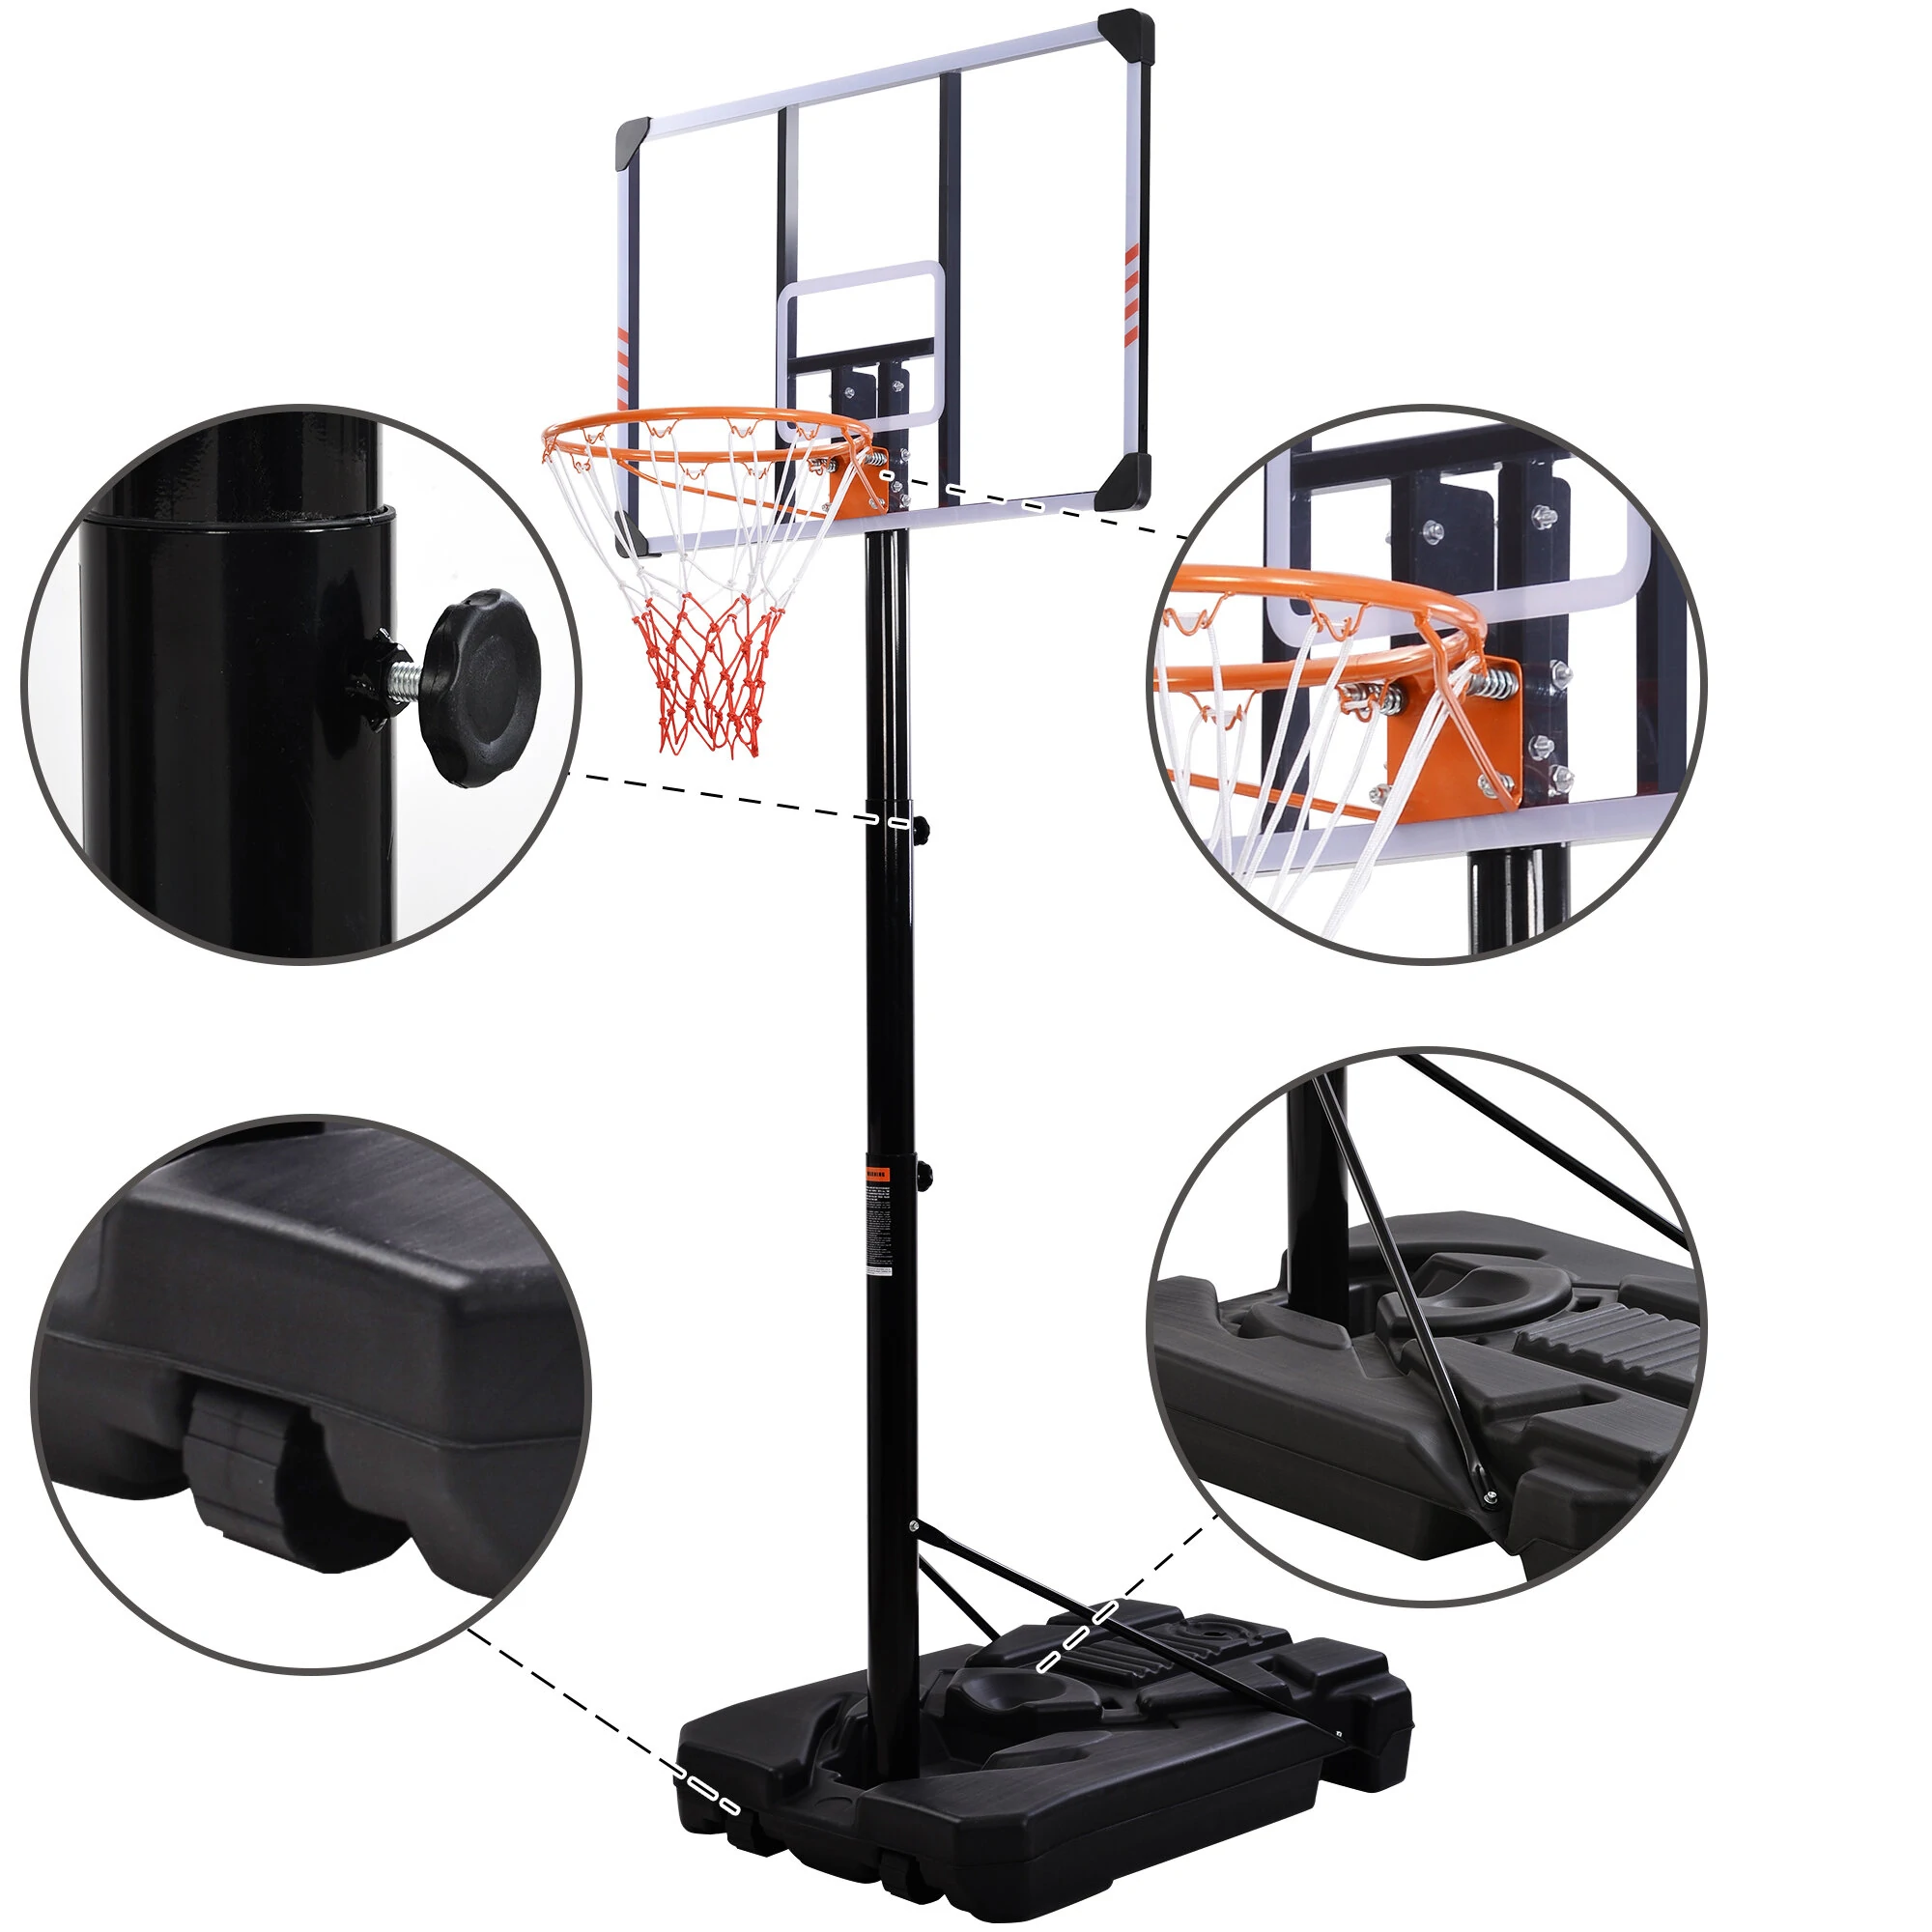 Bominfit Portable Basketball Hoop 8-position Height Adjustment 225-305cm Water/Sand Filled Adult/Children